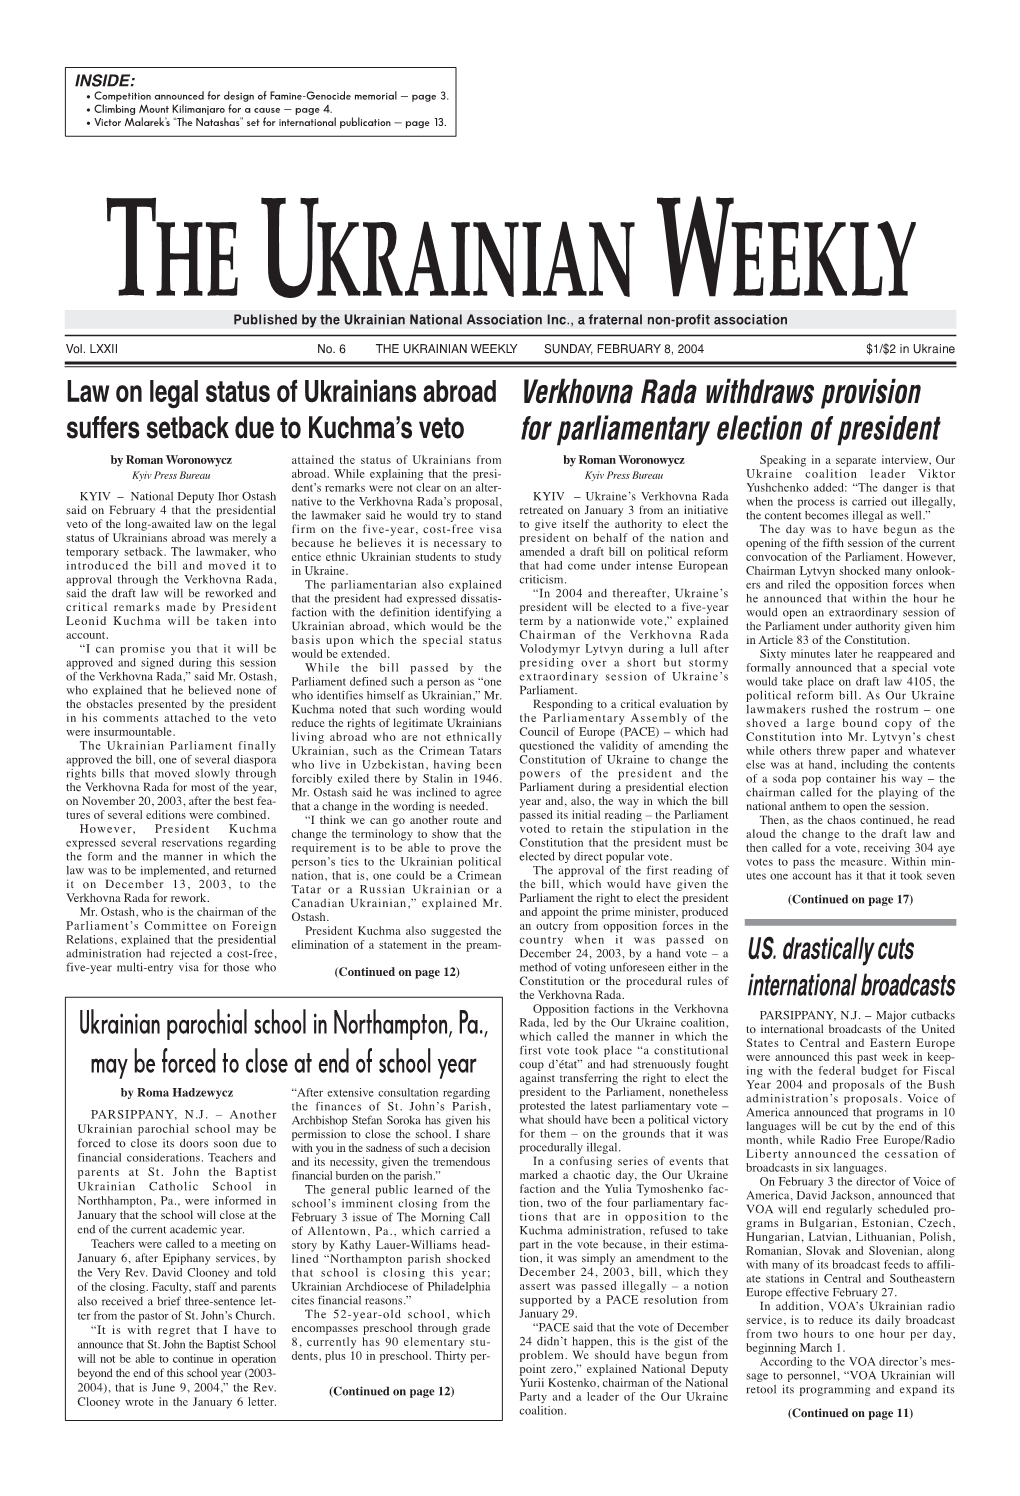 The Ukrainian Weekly 2004, No.6